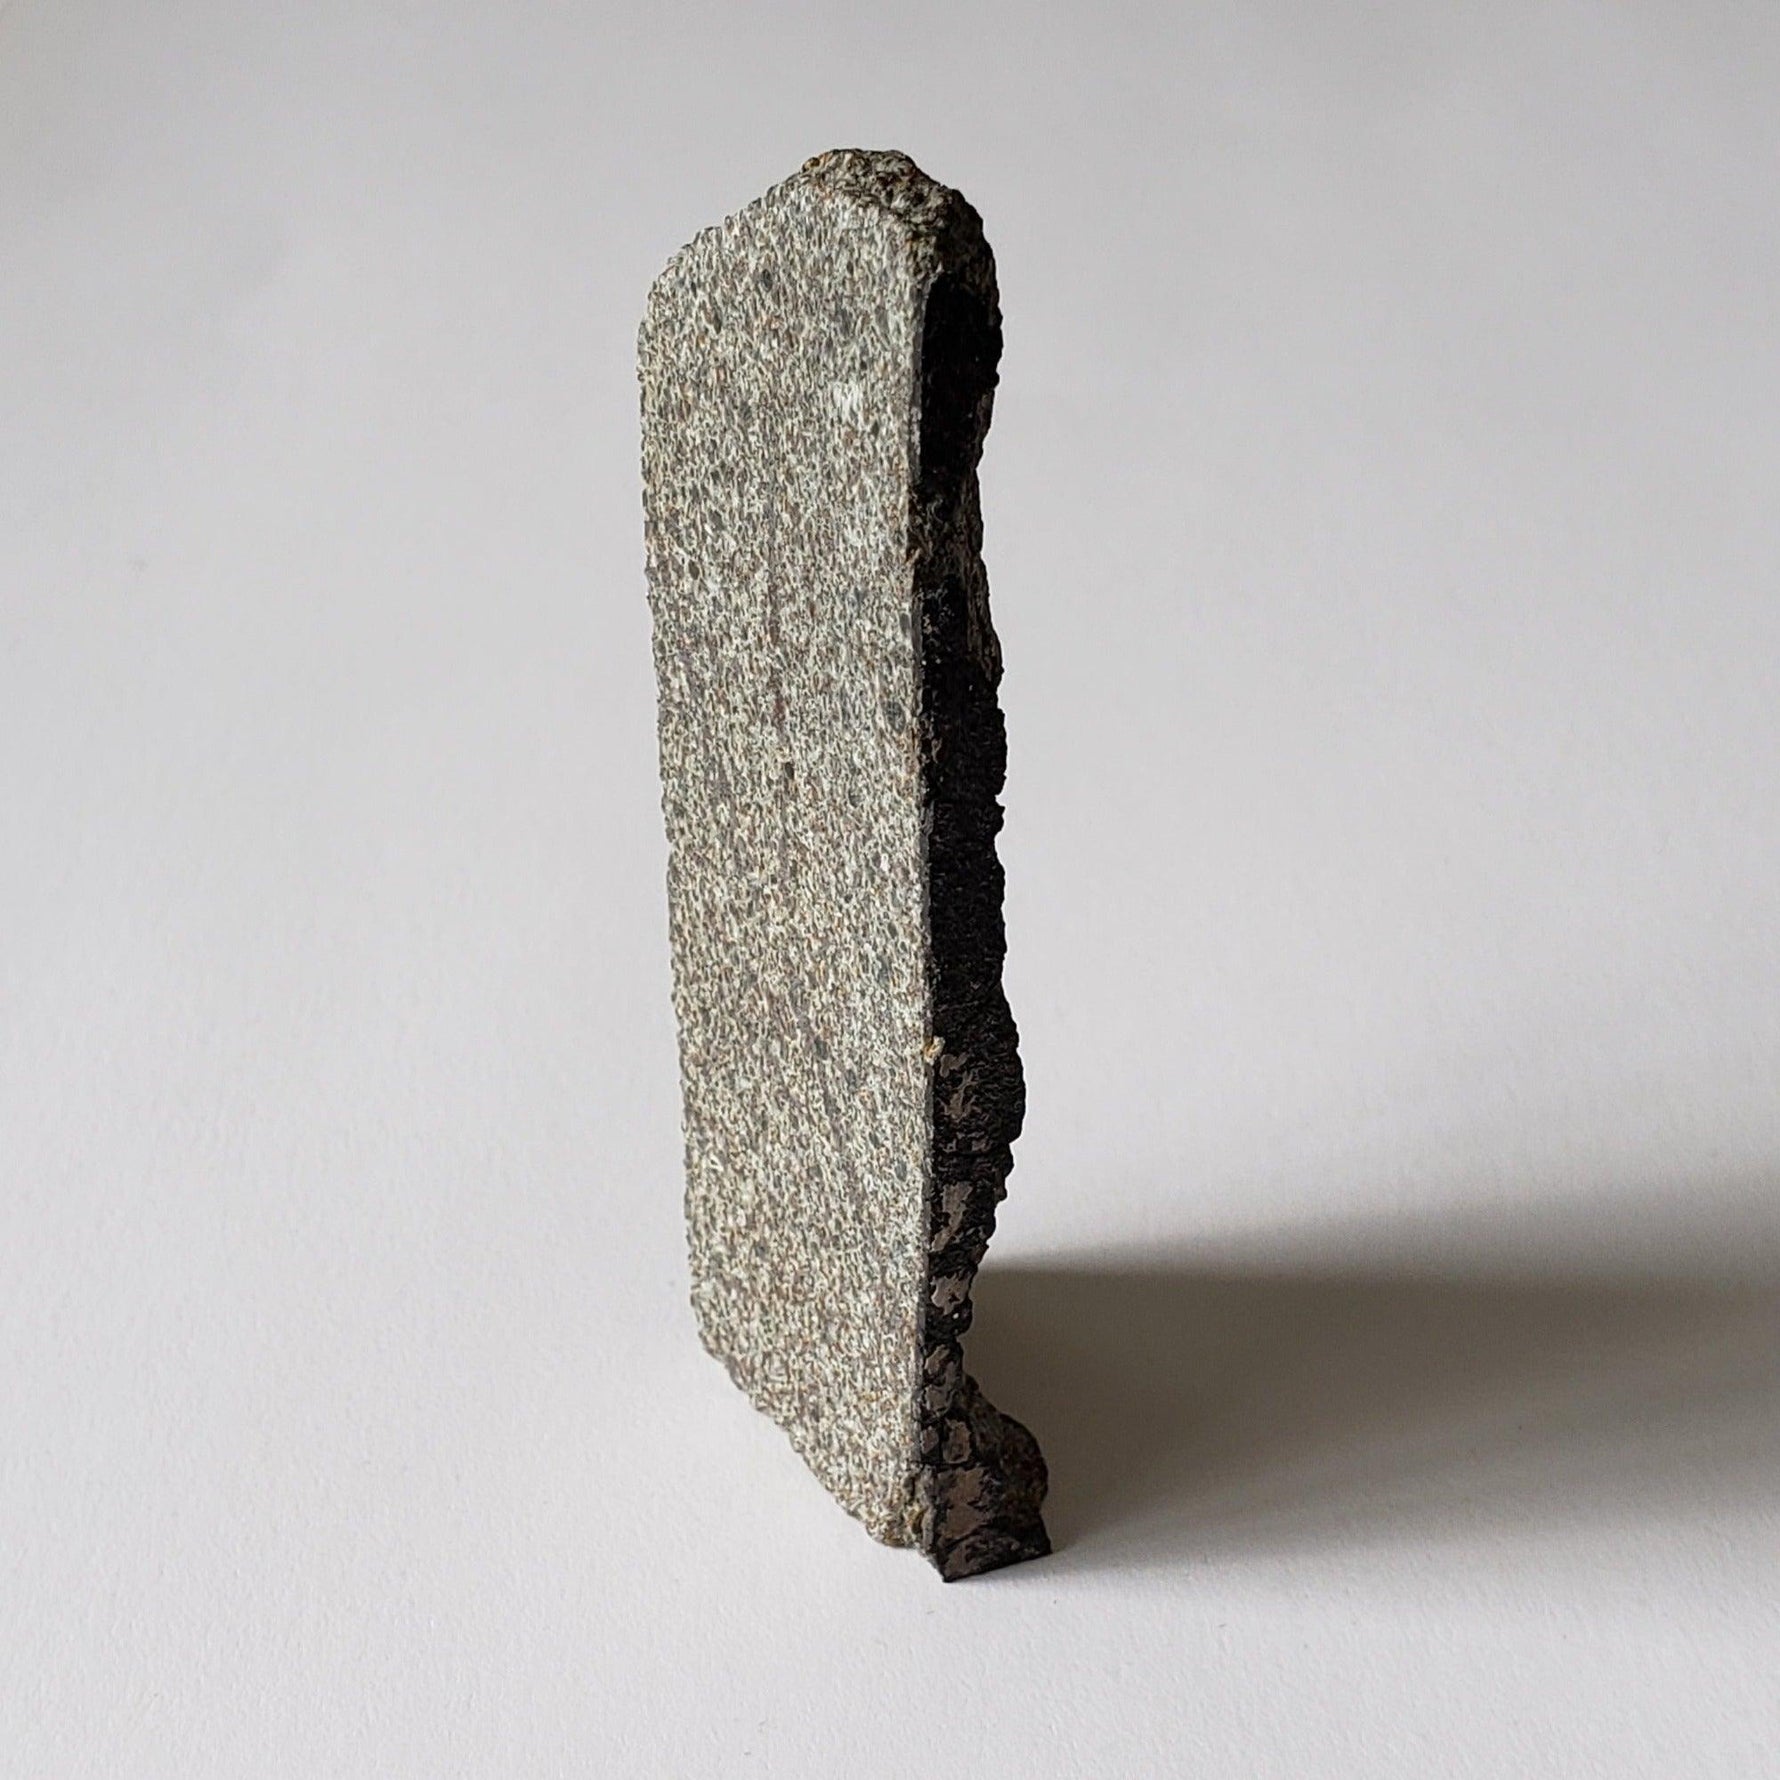 El Hammami Meteorite | 46.1gr | Fresh H5 1997 Slice | Tiris Zemmour, Mauritania